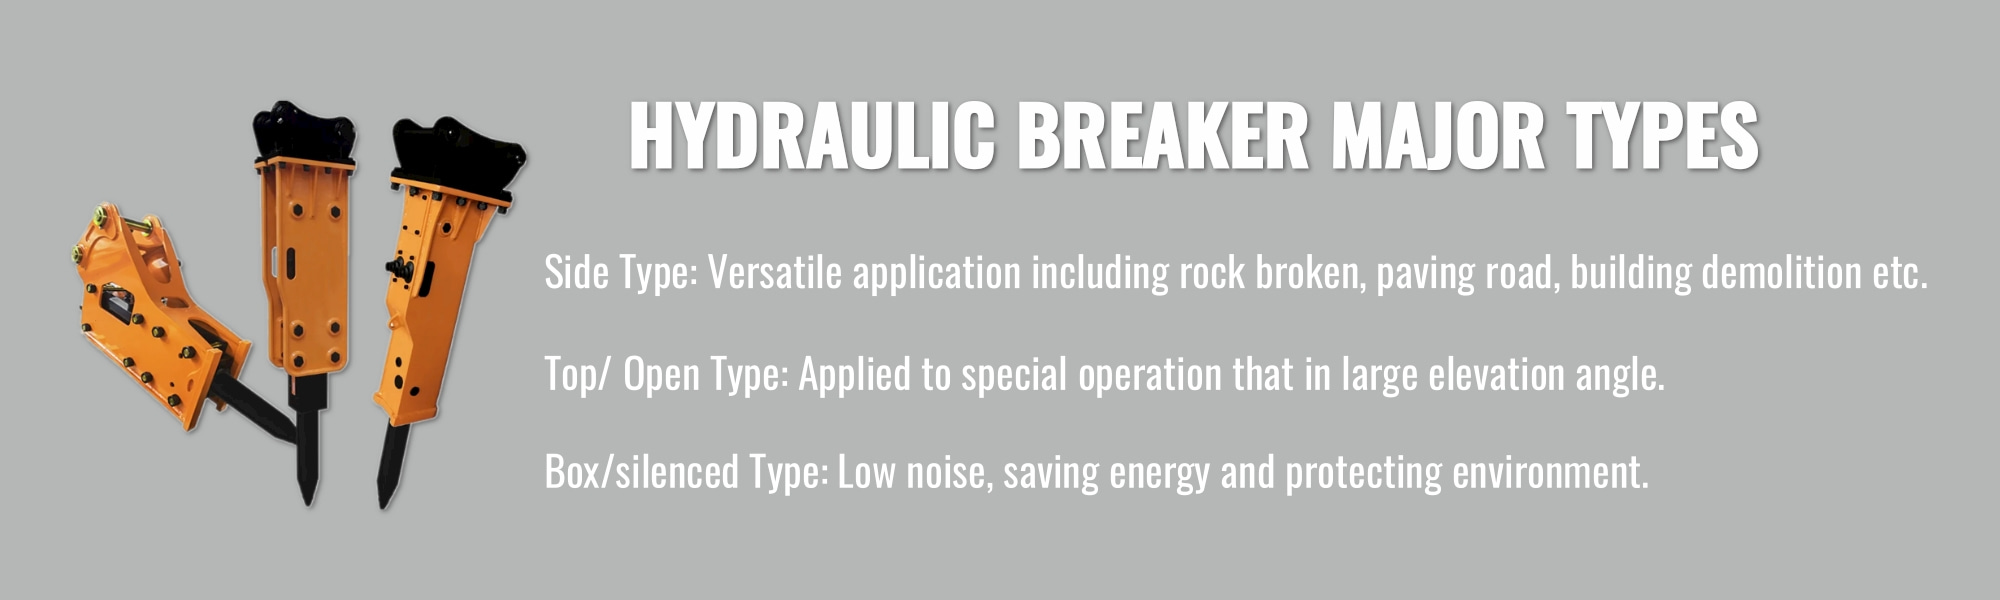 hydraulic breaker major types